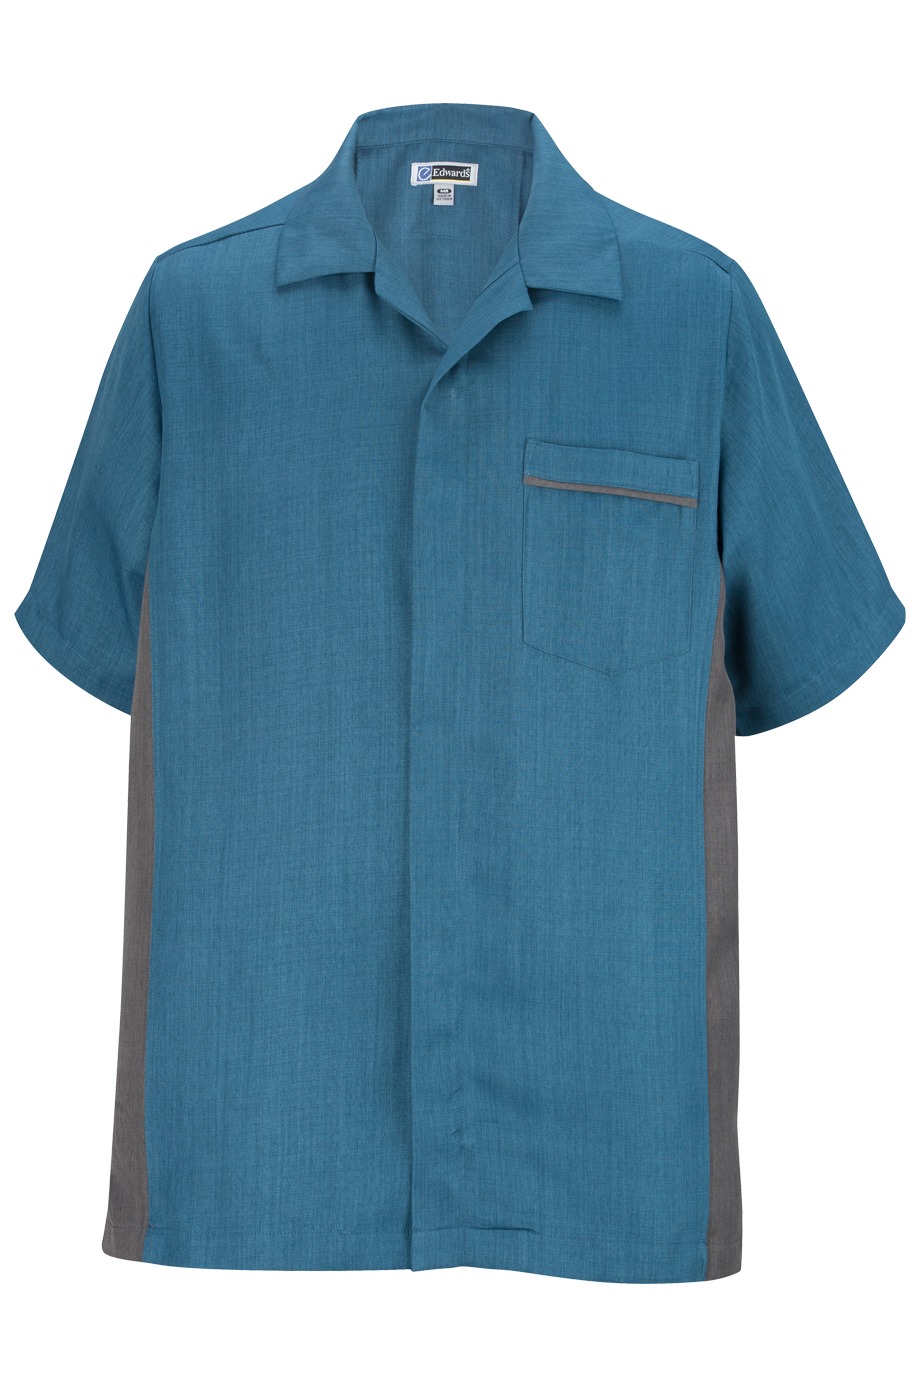 Edwards Garment 4890 - Premier Service Shirt